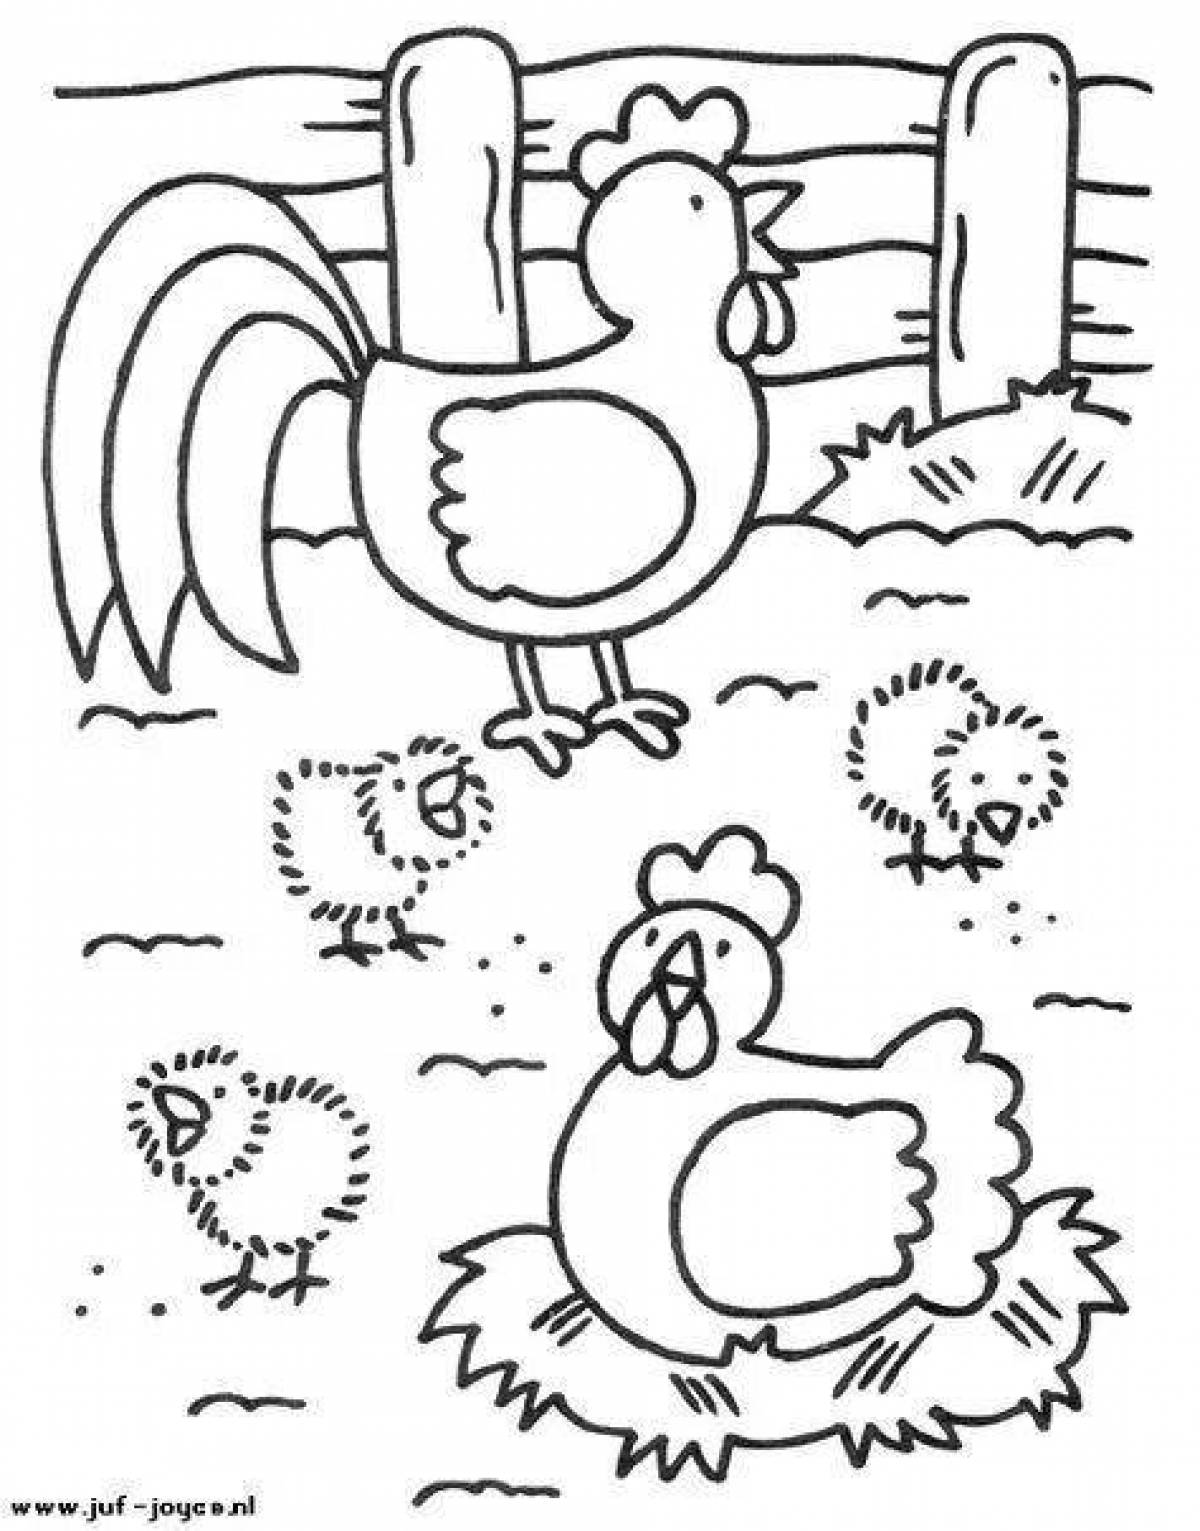 Splendid poultry coloring book for preschoolers